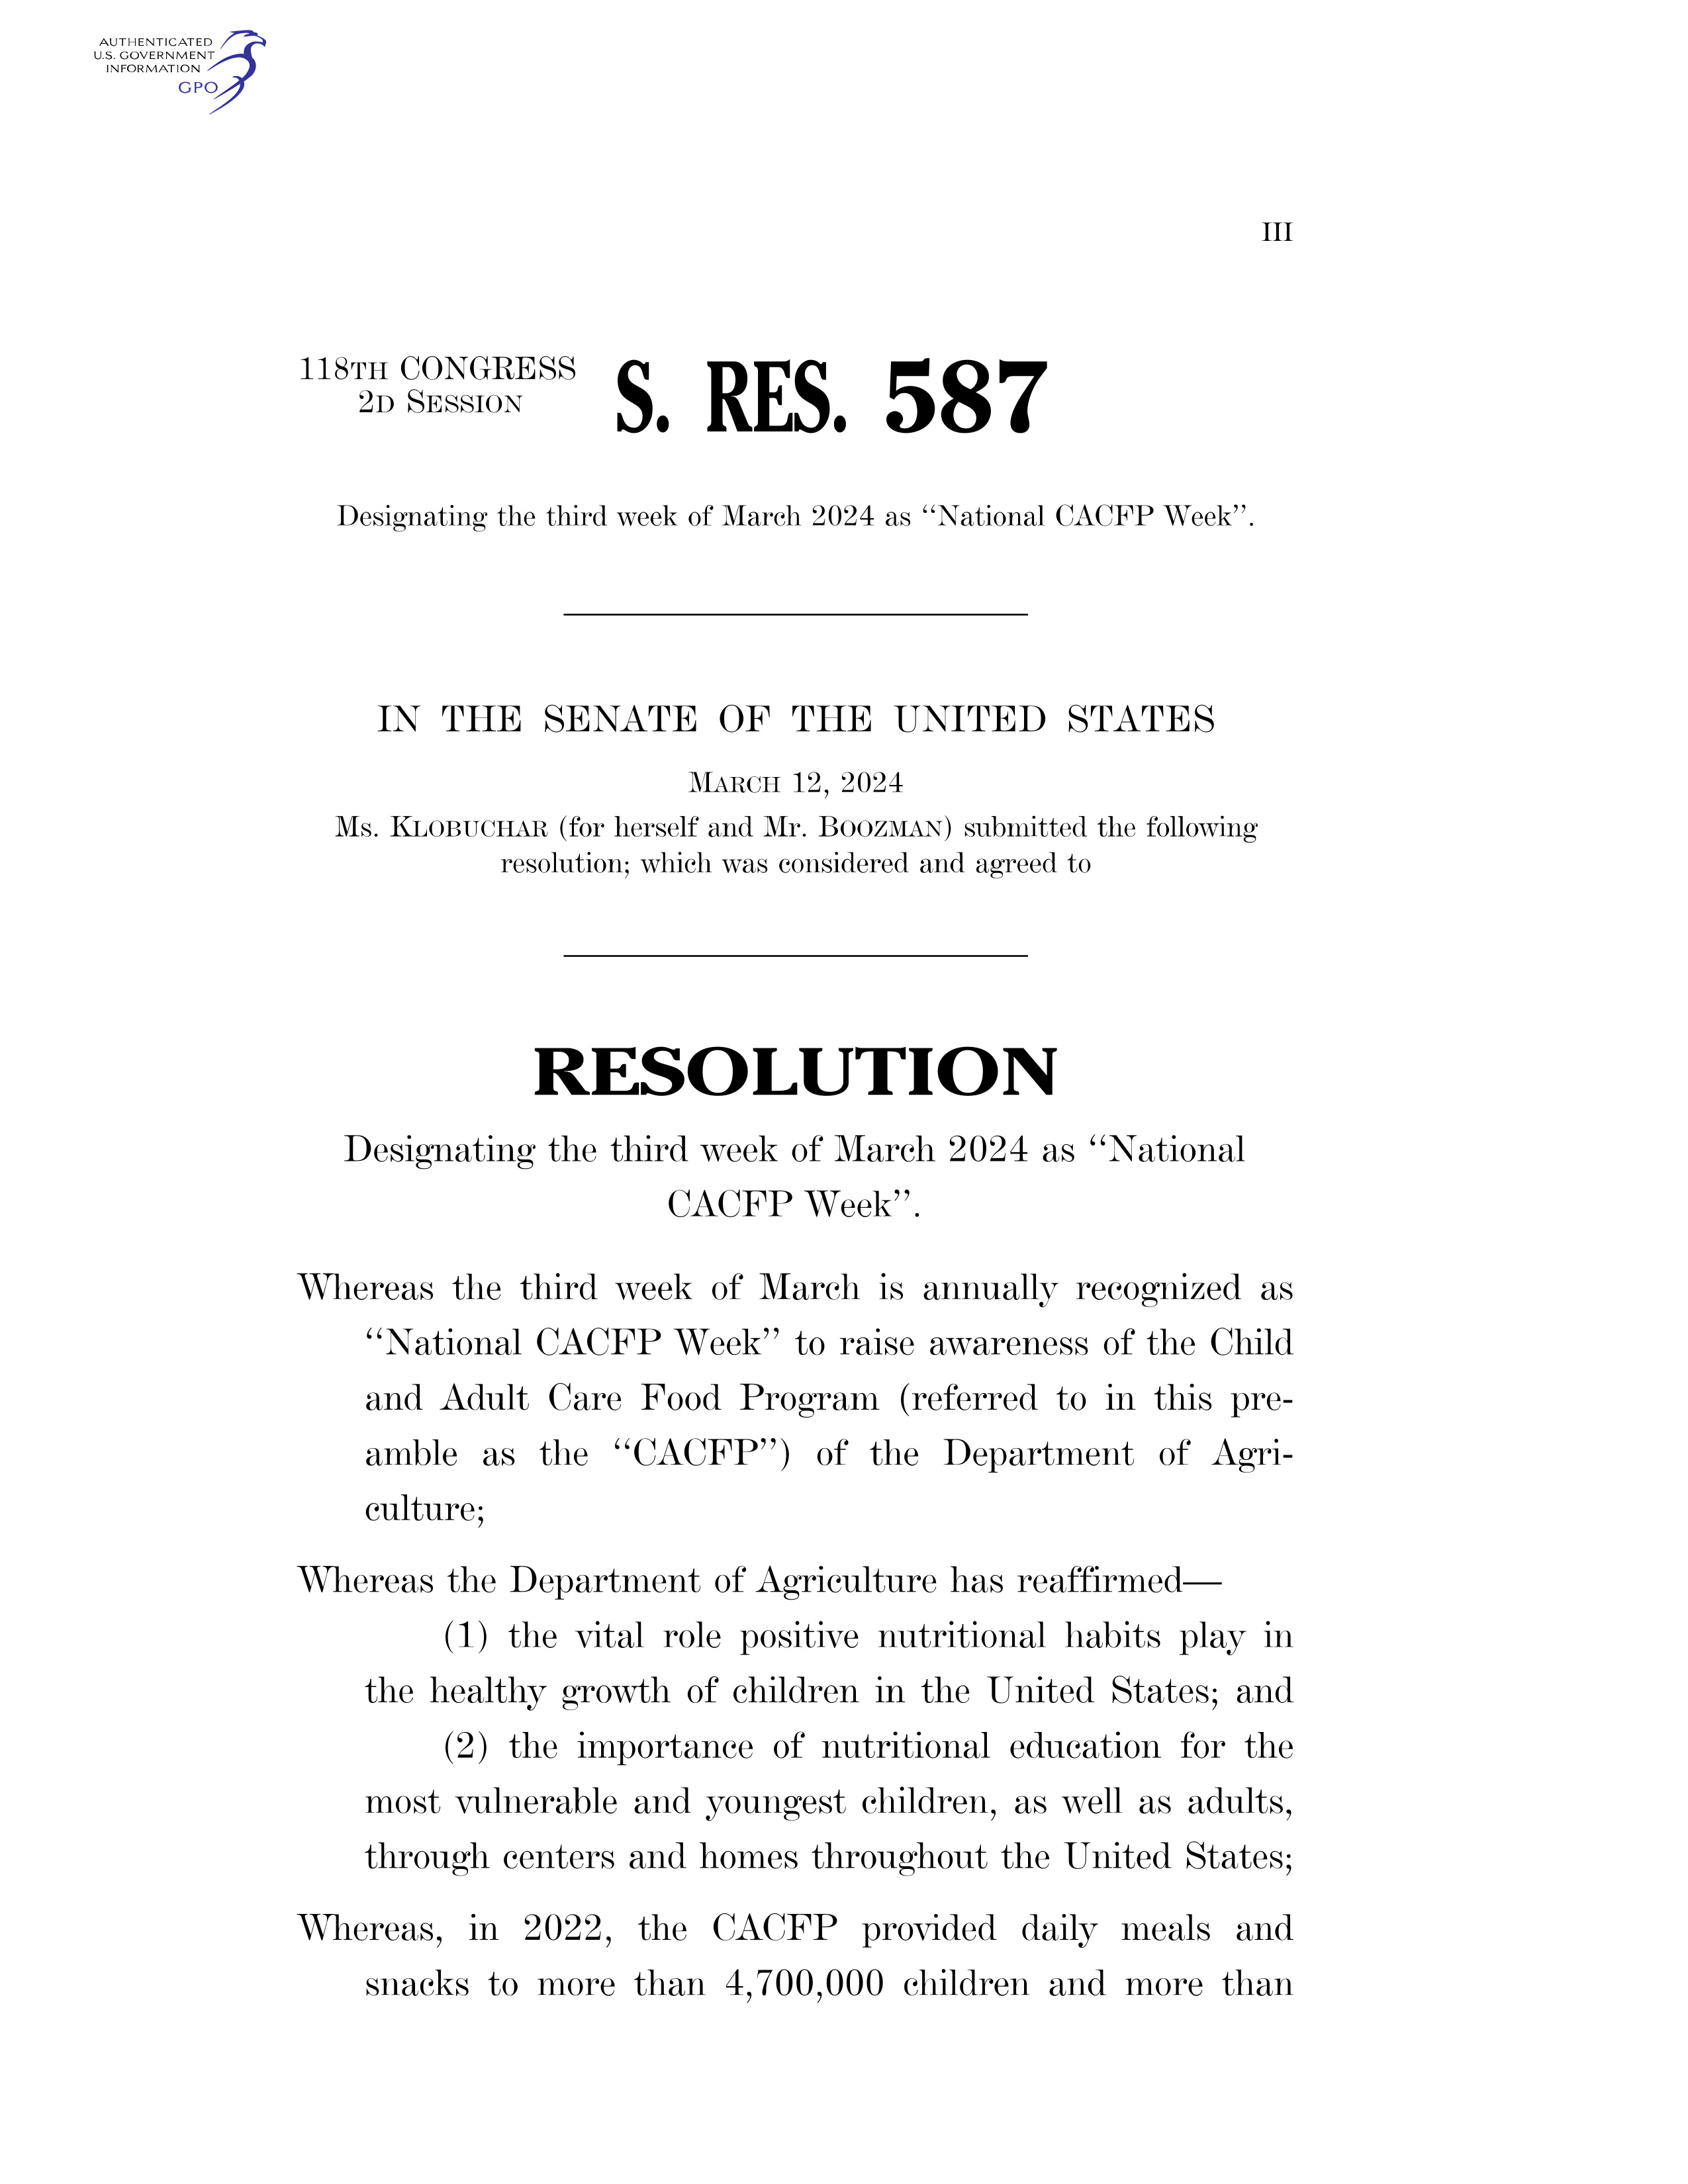 Senatre Resolution